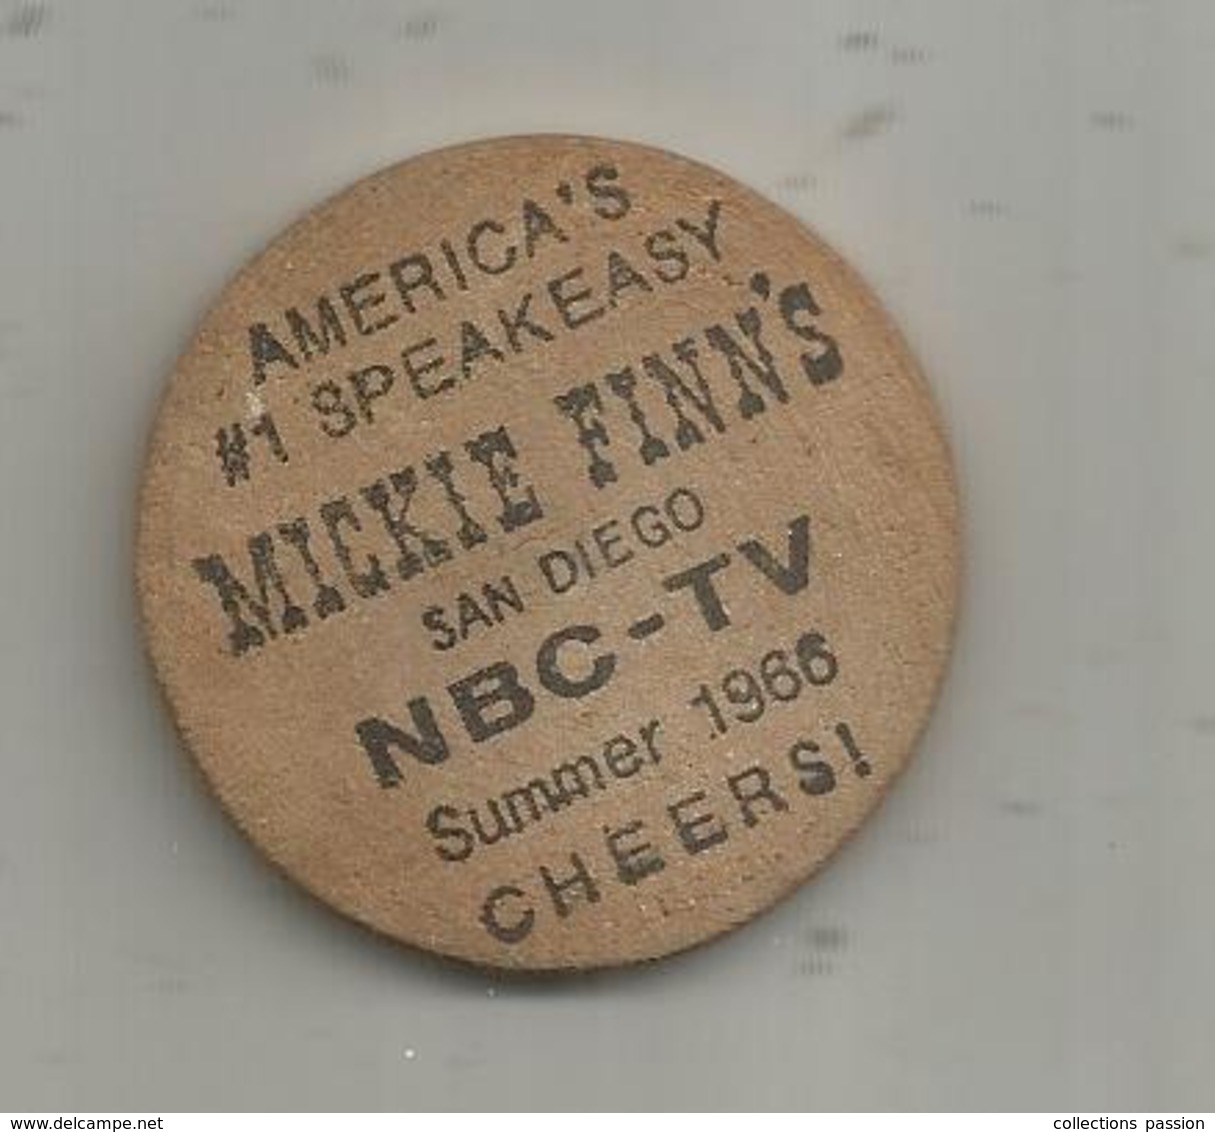 Jeton , Bois , One WOODEN NICKEL , United States Of America , 5 C , Mickie Finn's , SAN DIEGO , NBC-TV ,summer 1965 - Firmen